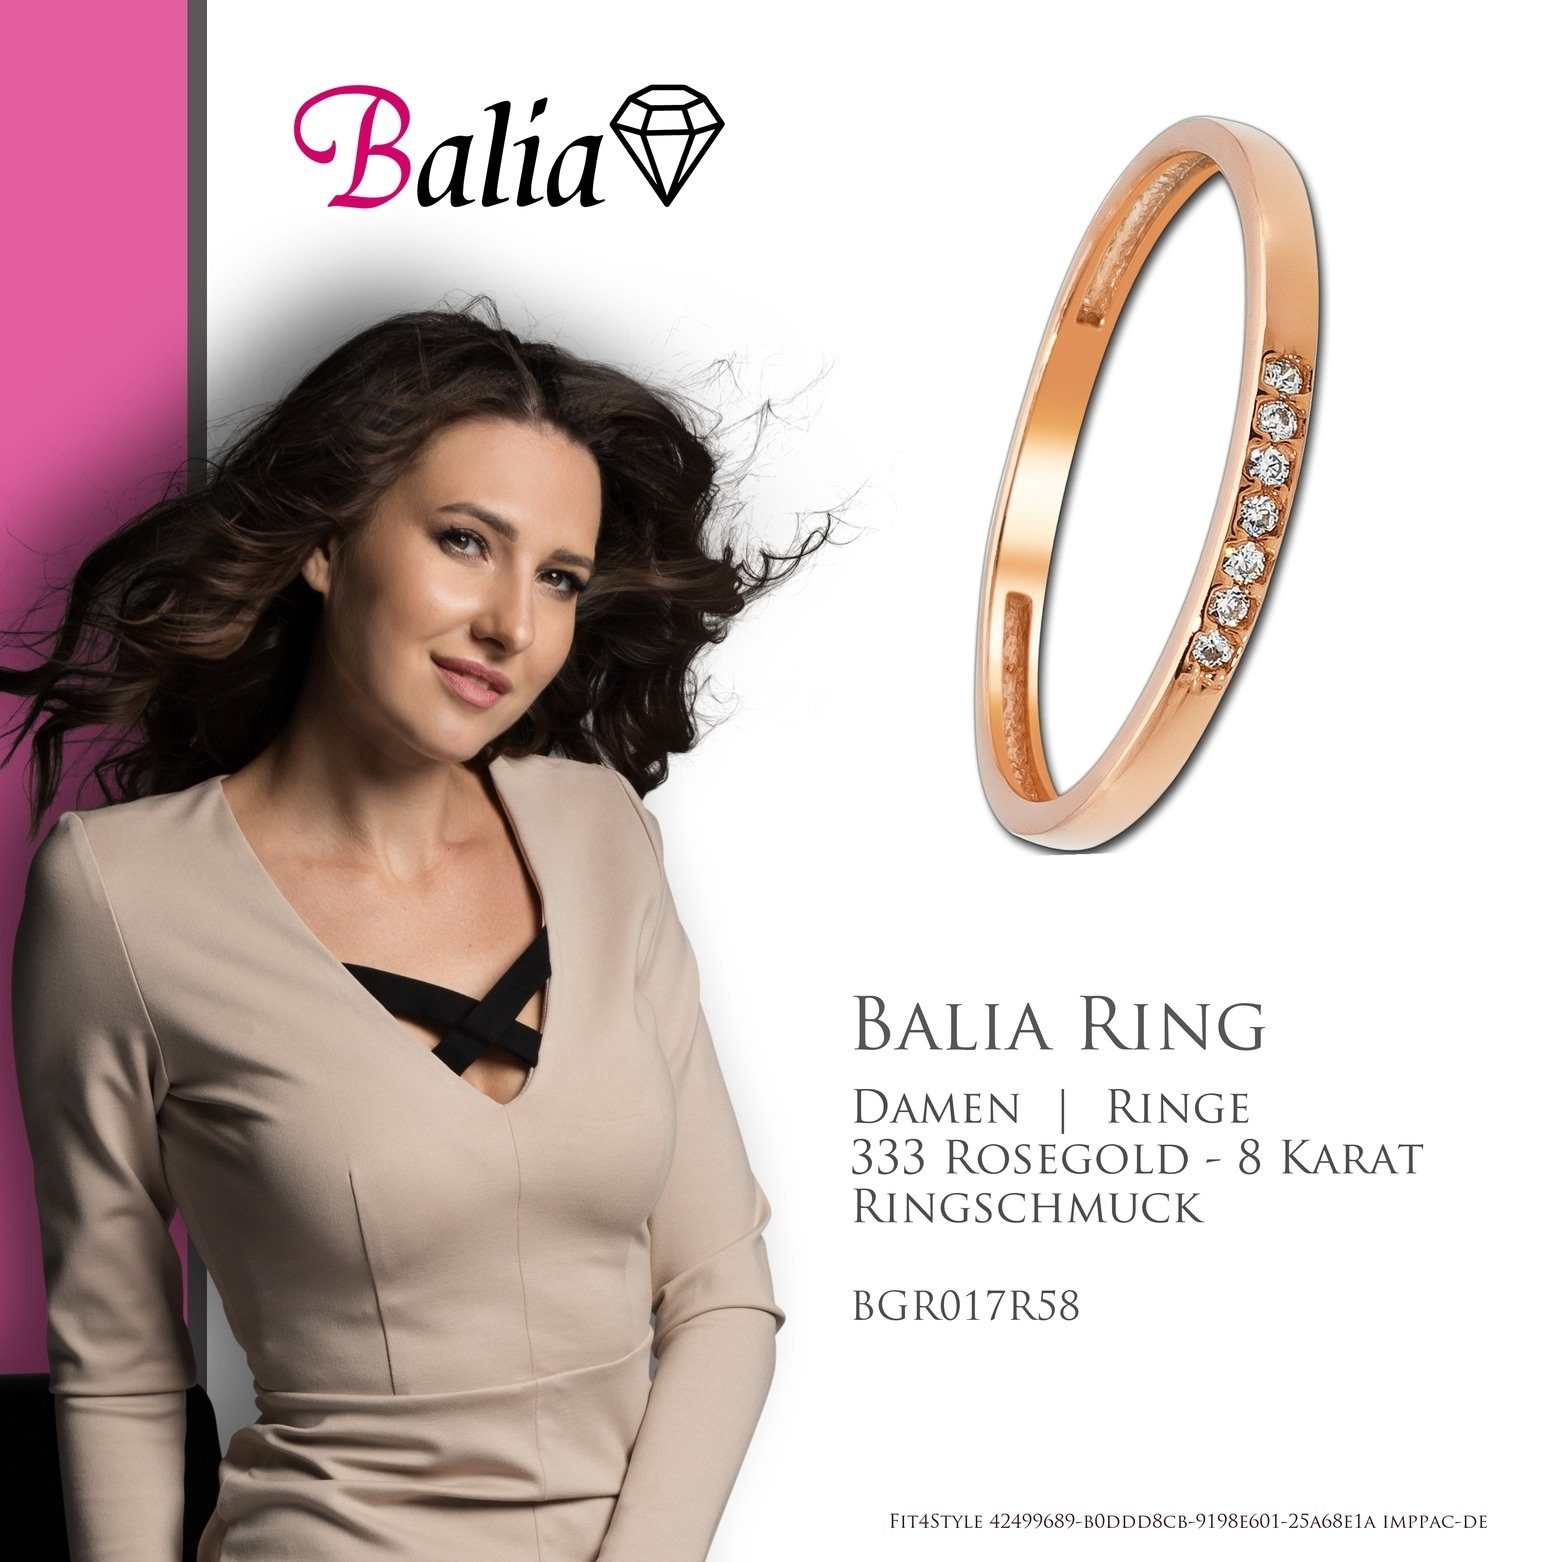 Balia Goldring Balia 333 Gr.58 (18,4) Ringe, 8 Zirkonias, Rosegold 8Kt 7 Damen (Fingerring), 58 Karat Ring - Gold Blatt Damen